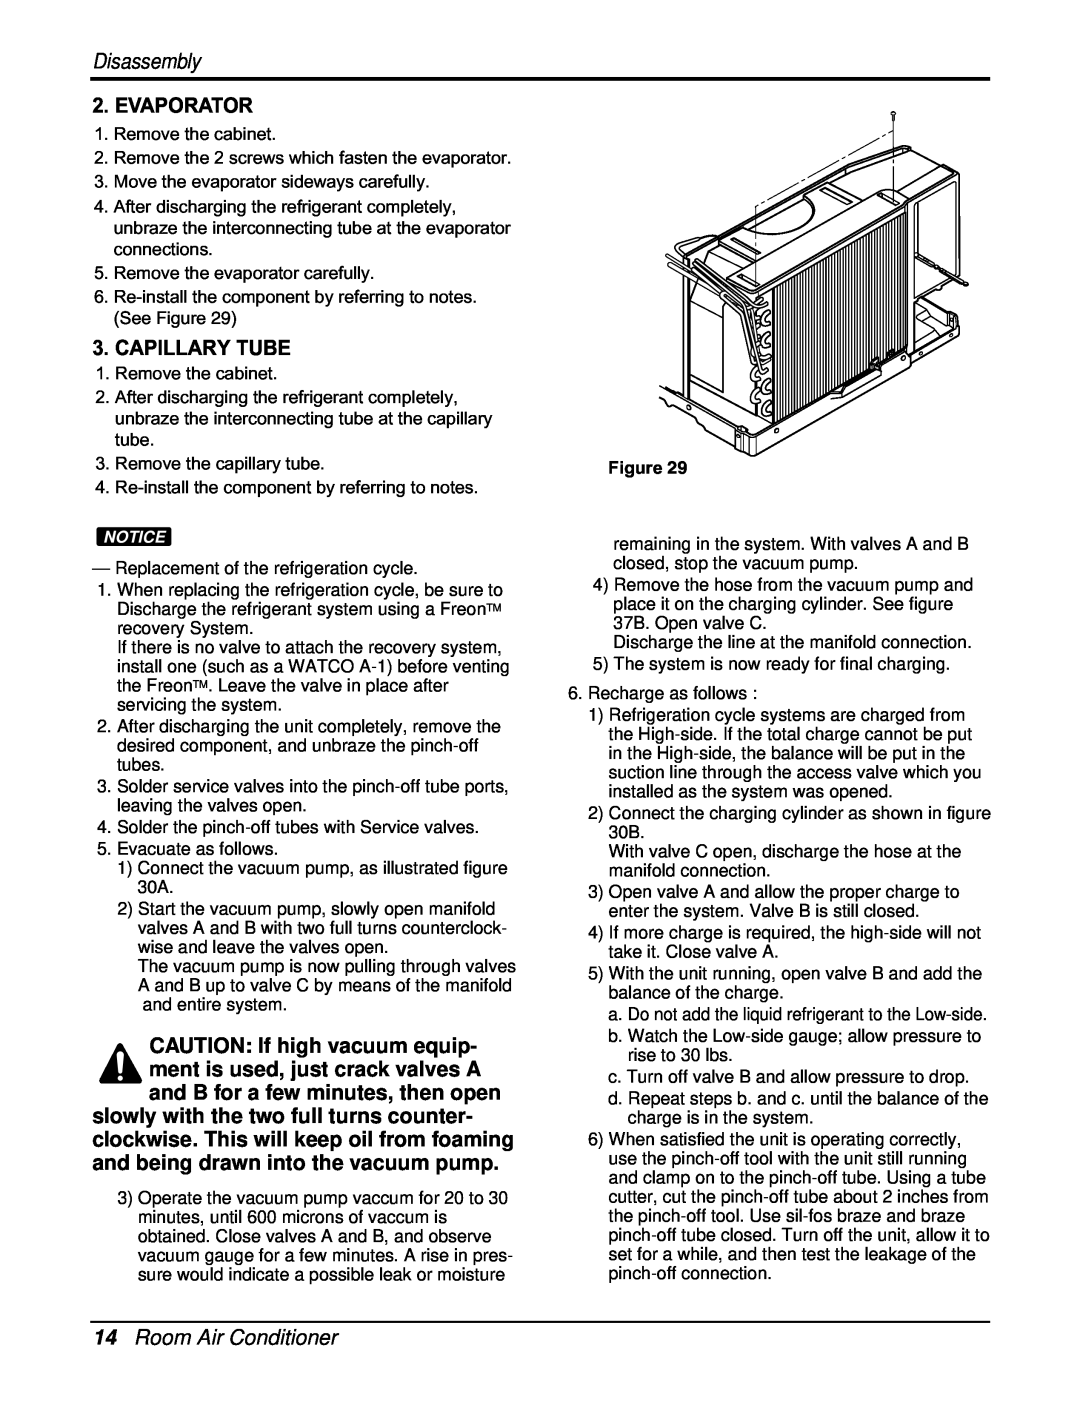 Friedrich CP08E10, CP06E10 manual Evaporator, Capillary Tube, 14Room Air Conditioner, Disassembly 